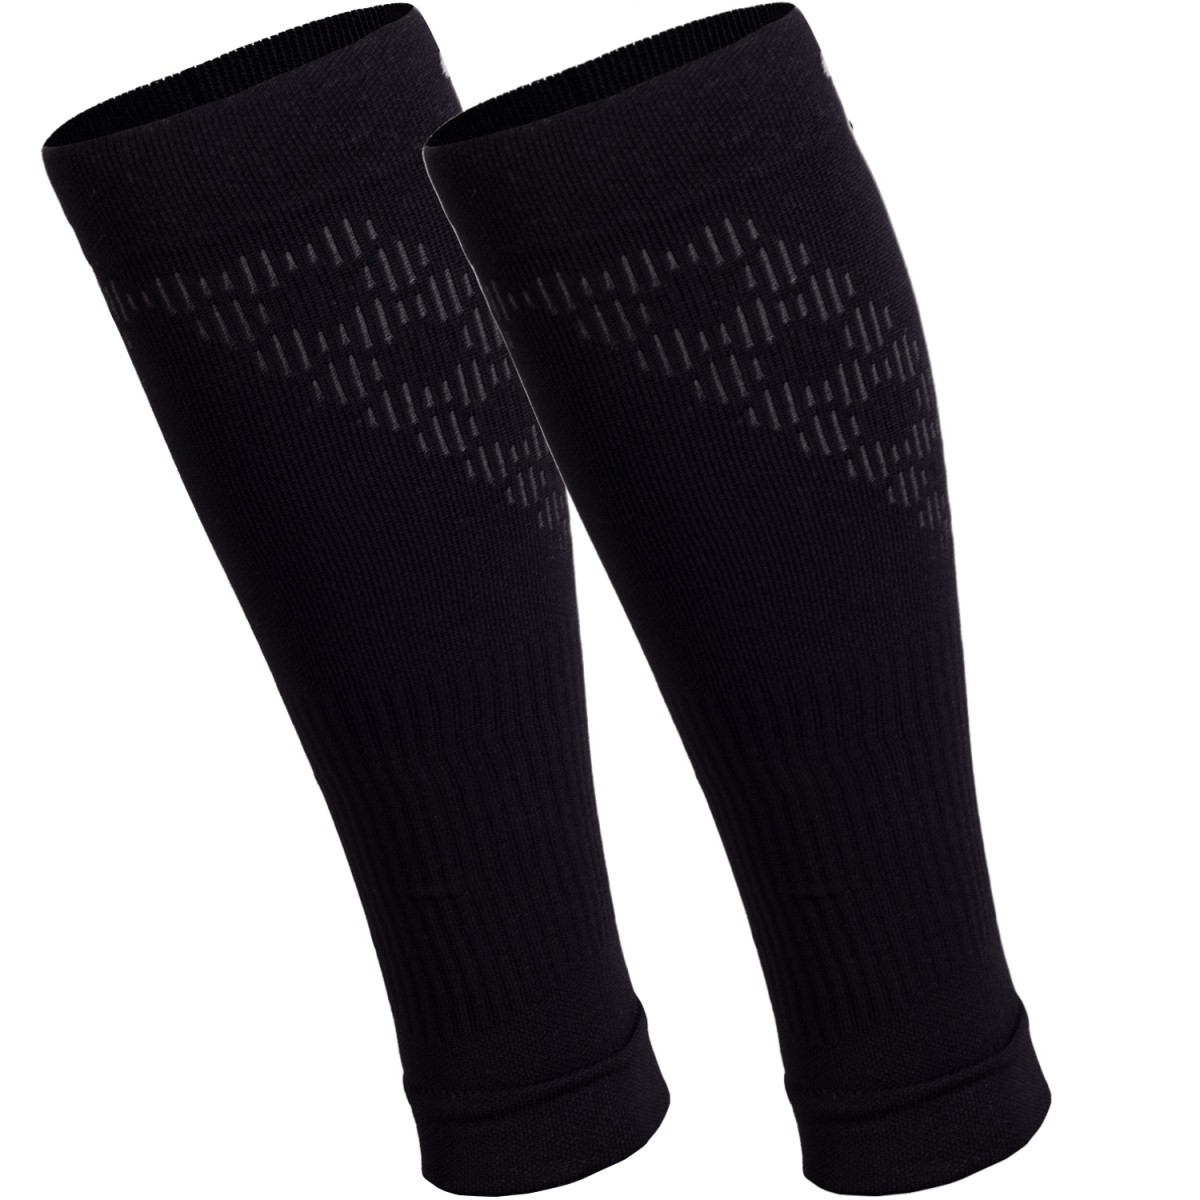 ELEVEN SPORTSWEAR compression calf sleeves POWERFLOW black